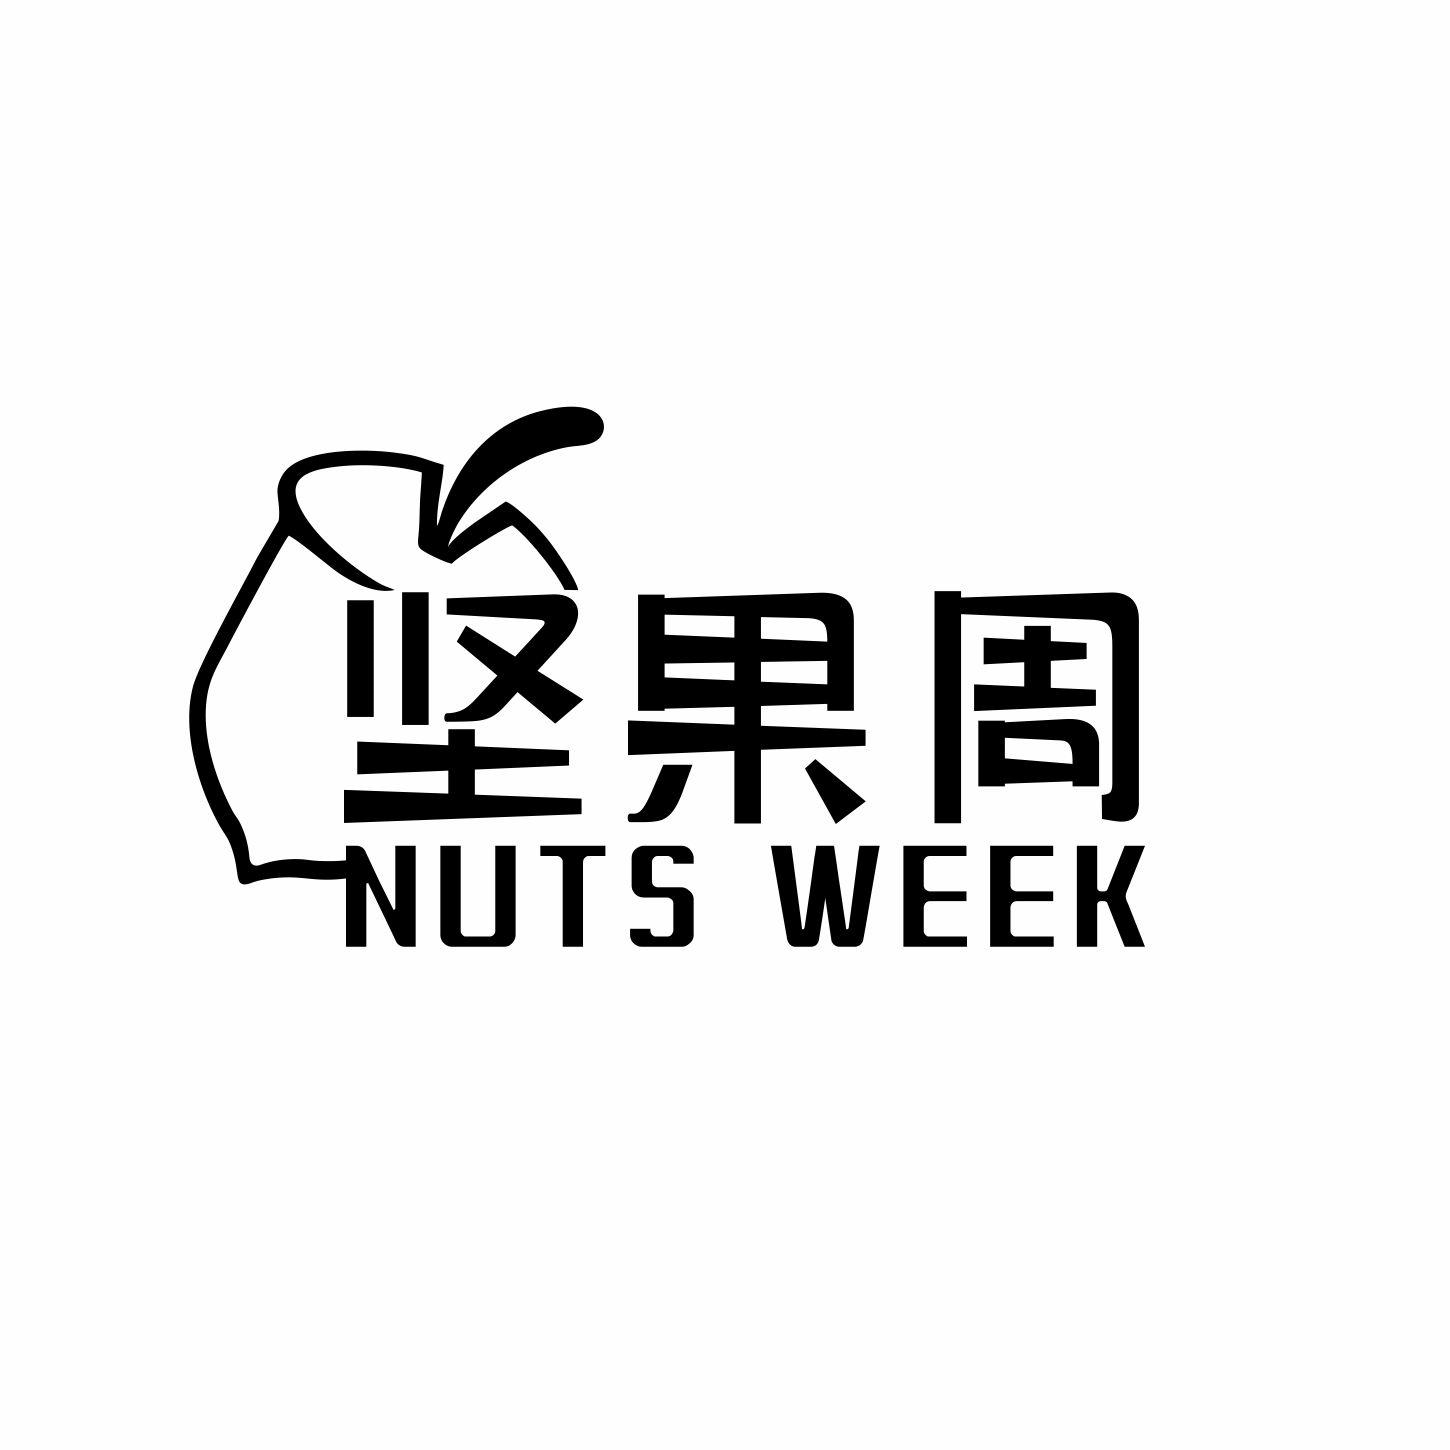 坚果周 NUTS WEEK